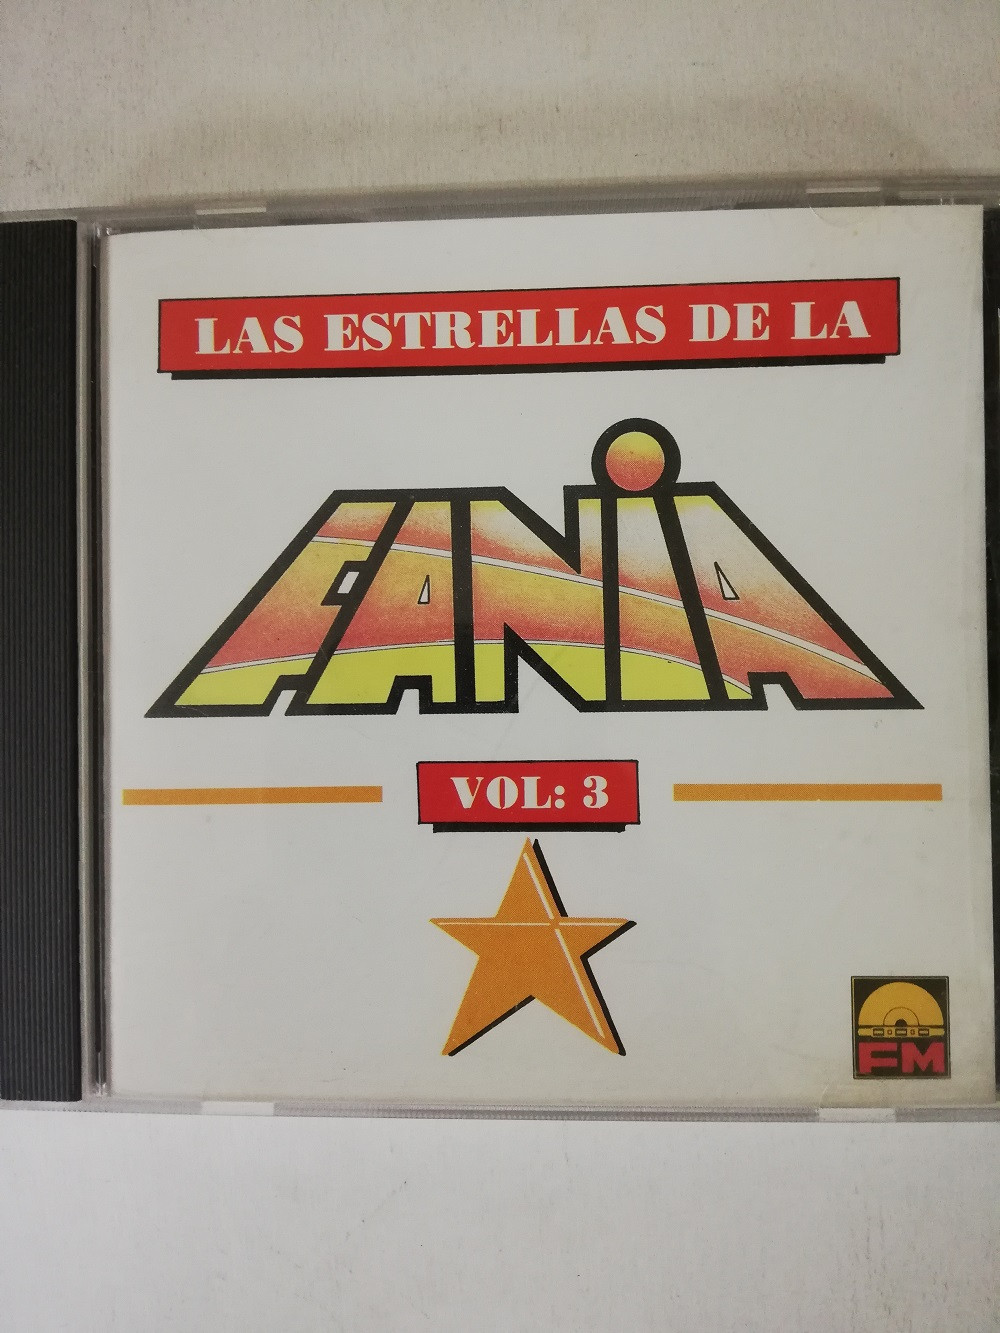 Imagen CD FANIA ALL STARS - LAS ESTRELLAS DE LA FANIA VOL. 3 1